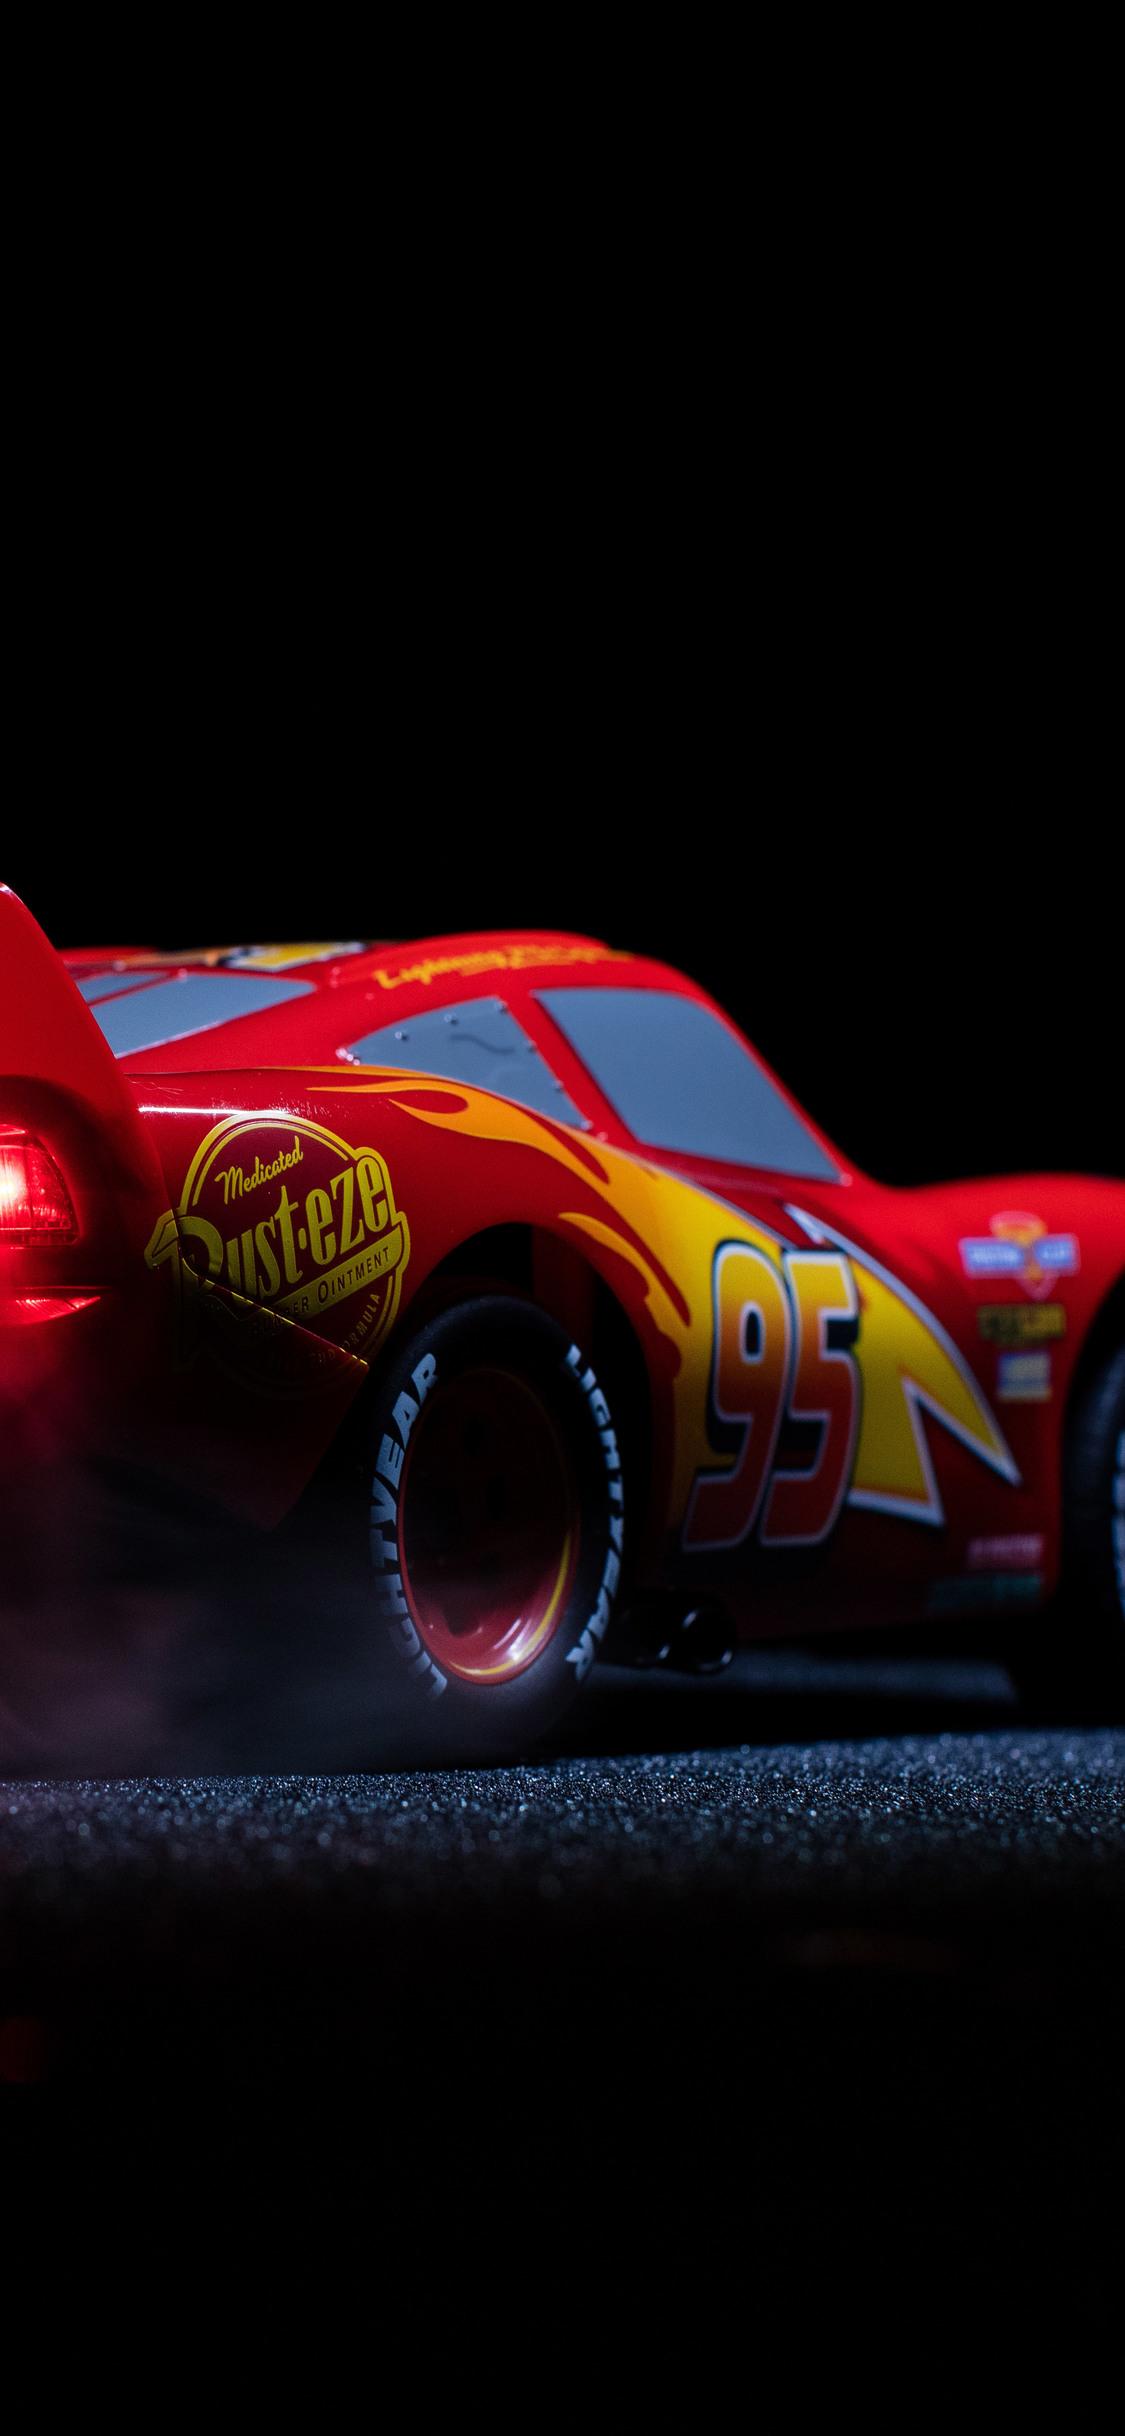 Lightning McQueen Cars 3 Pixar Disney 4k iPhone XS